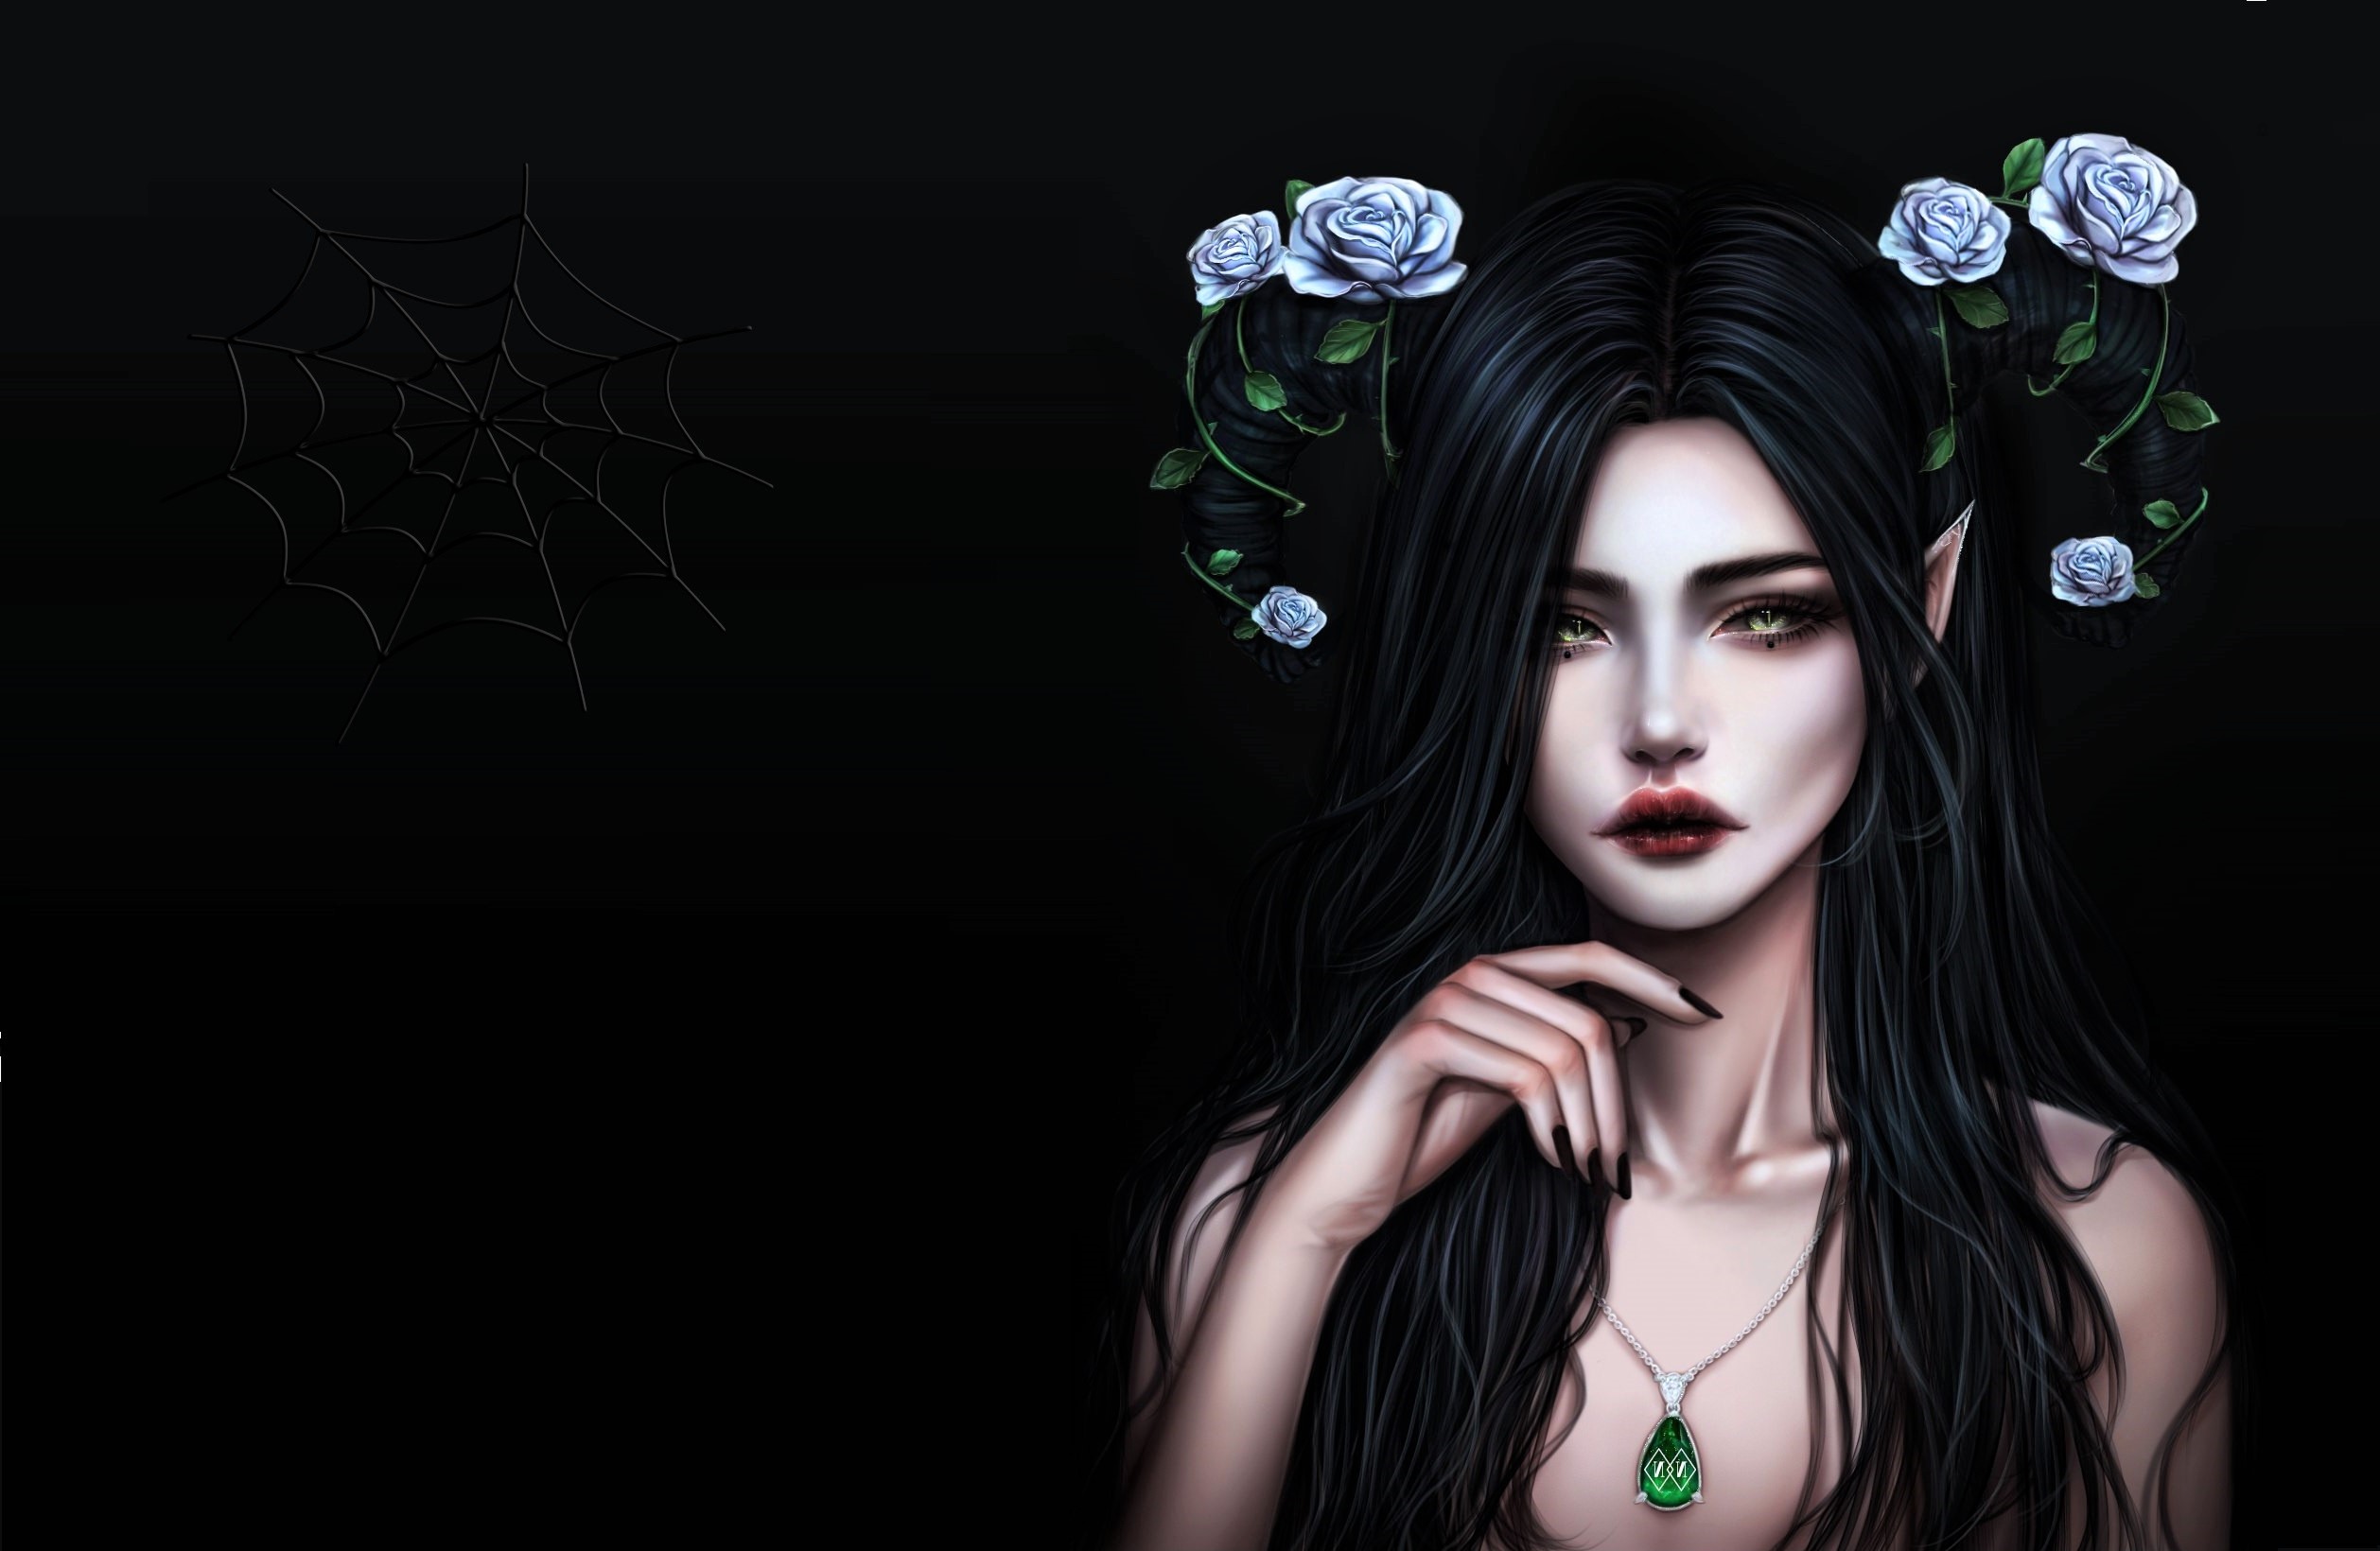 Artistic Black Hair Girl Gothic Rose Spider Web Woman 2516x1640